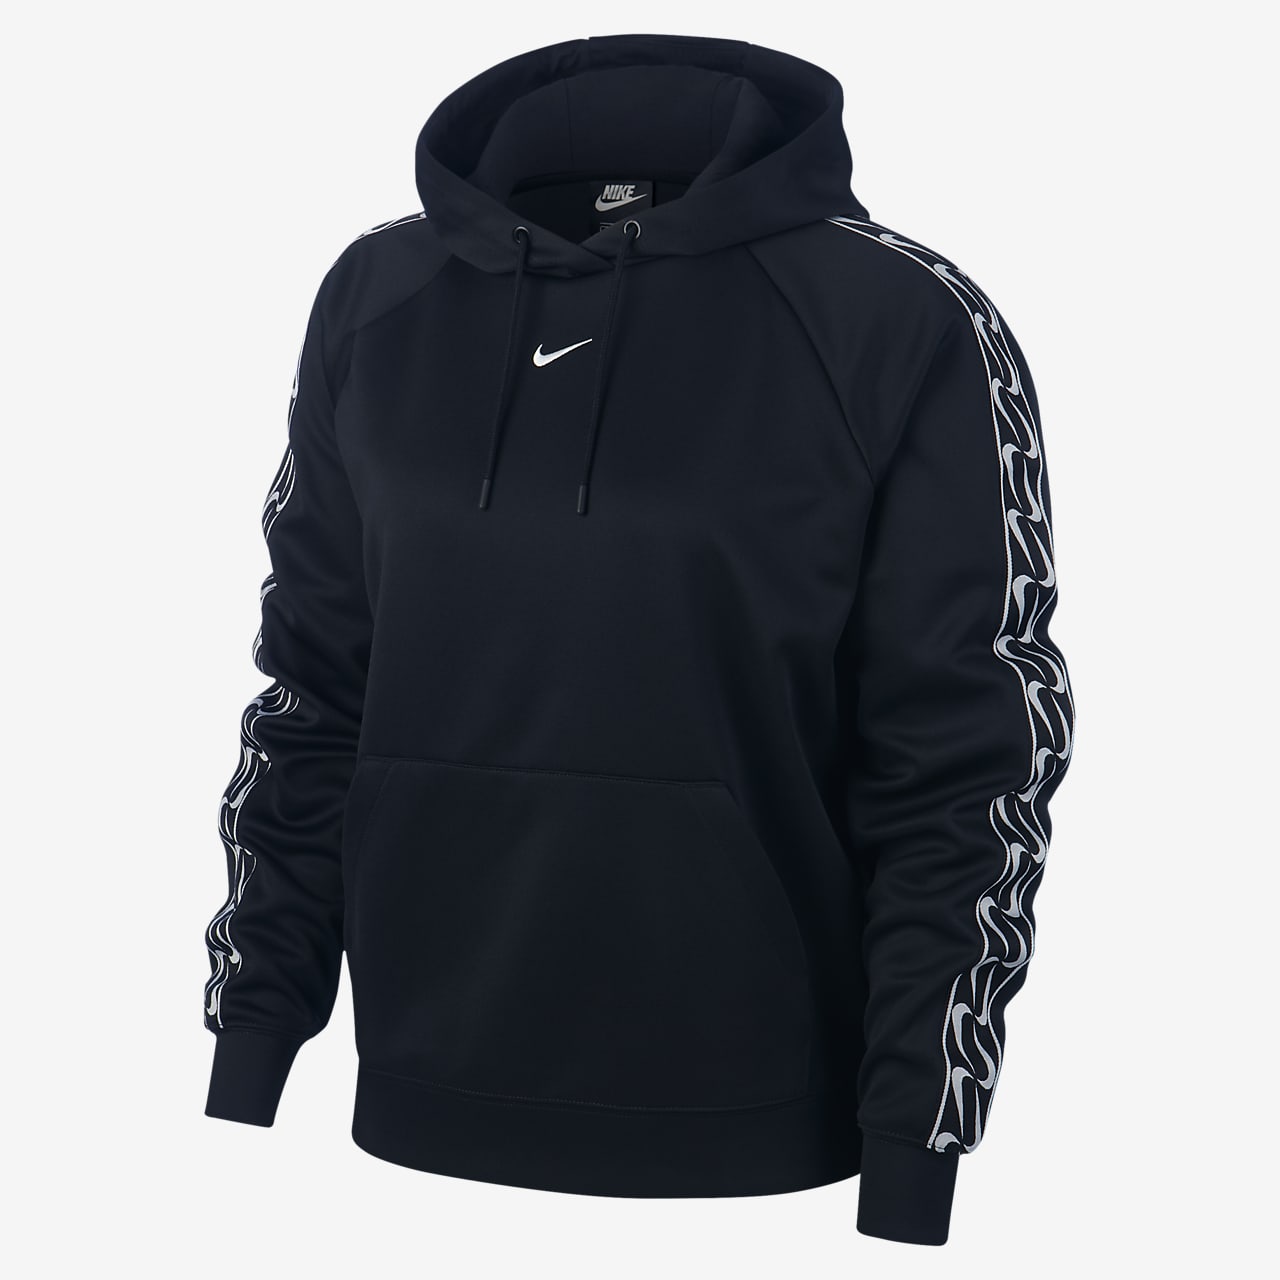 nike women's logo pullover hoodie